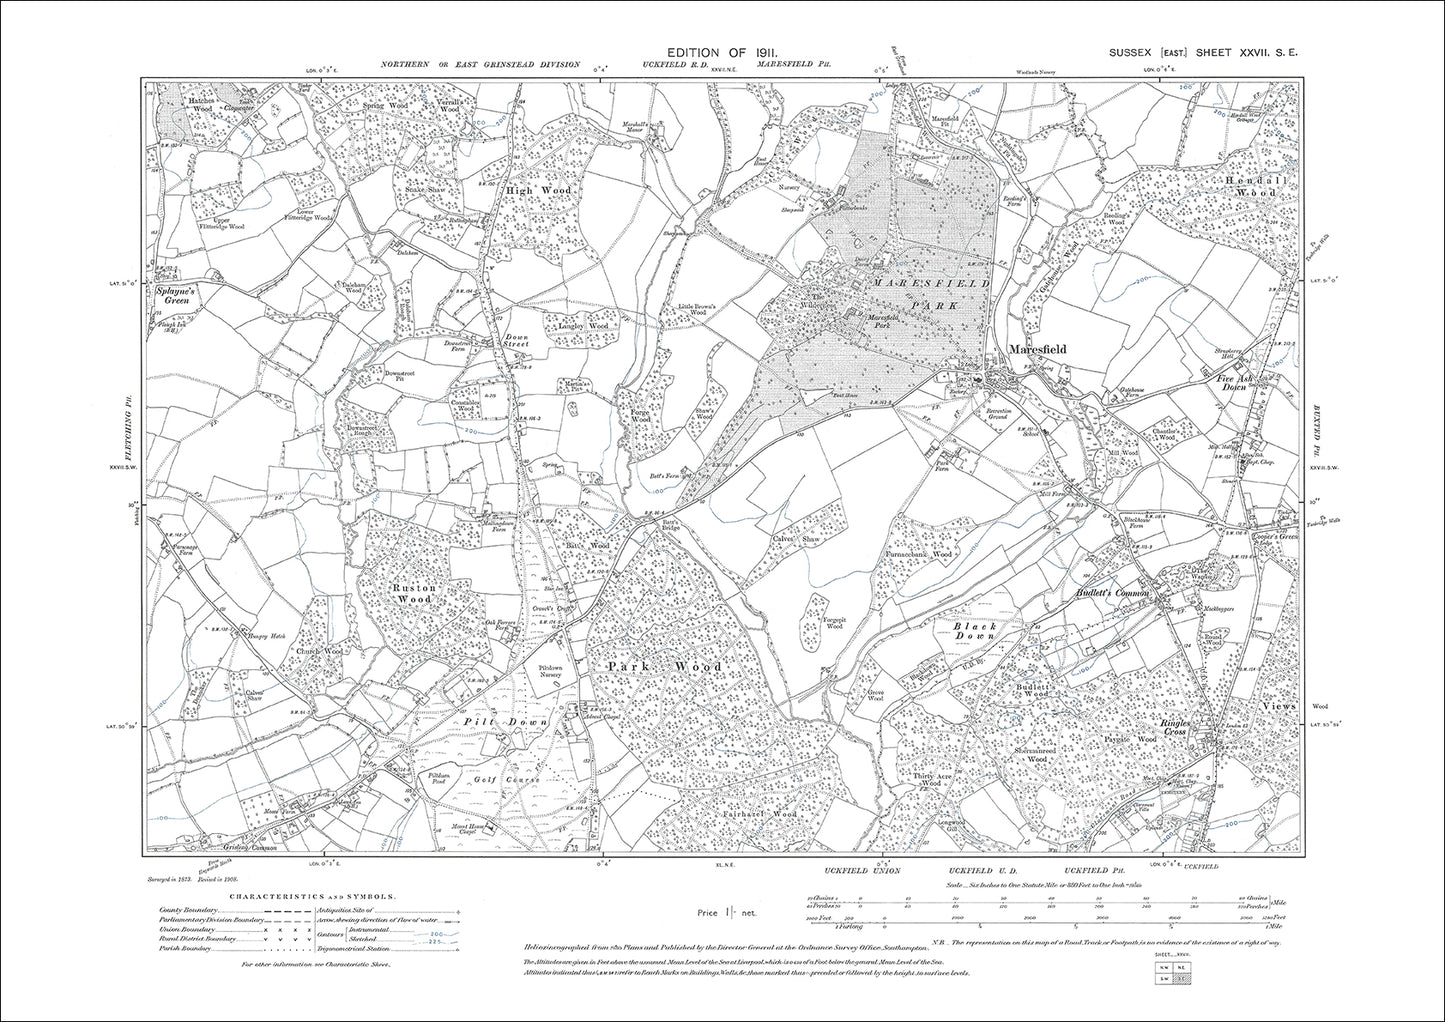 Maresfield, Budlett's Common, Ringles Cross, Pilt Down, old map Sussex 1911: 27SE